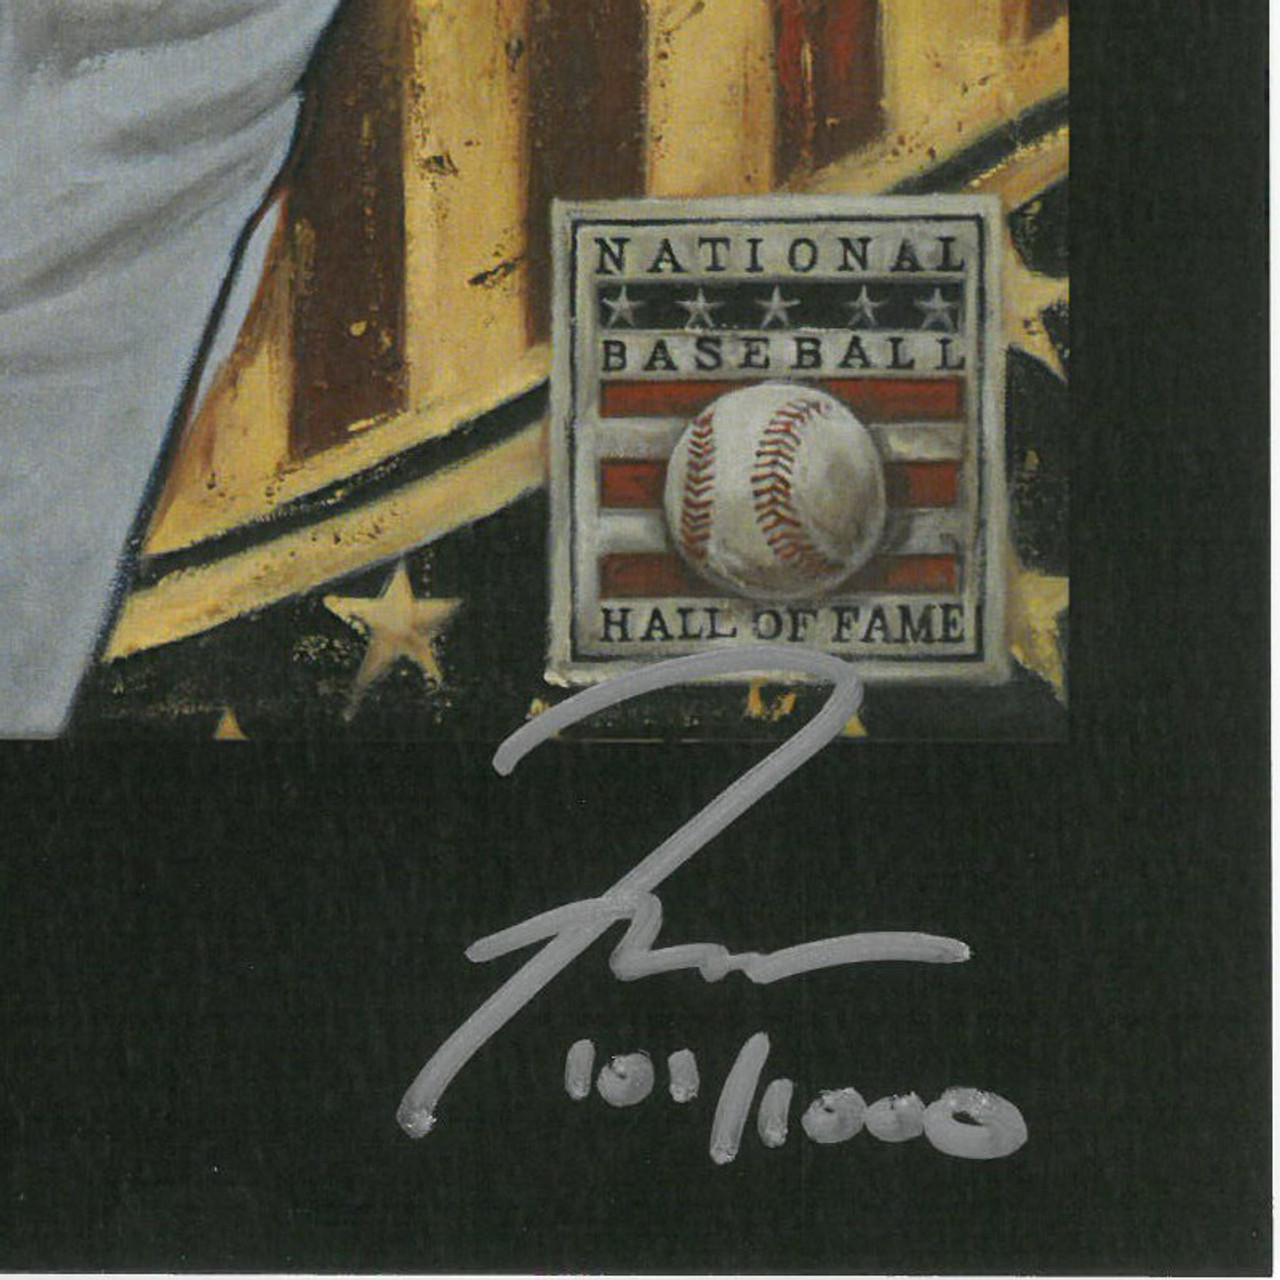 Chipper Jones Autographed Signed Atlanta Braves Framed Photo (MLB